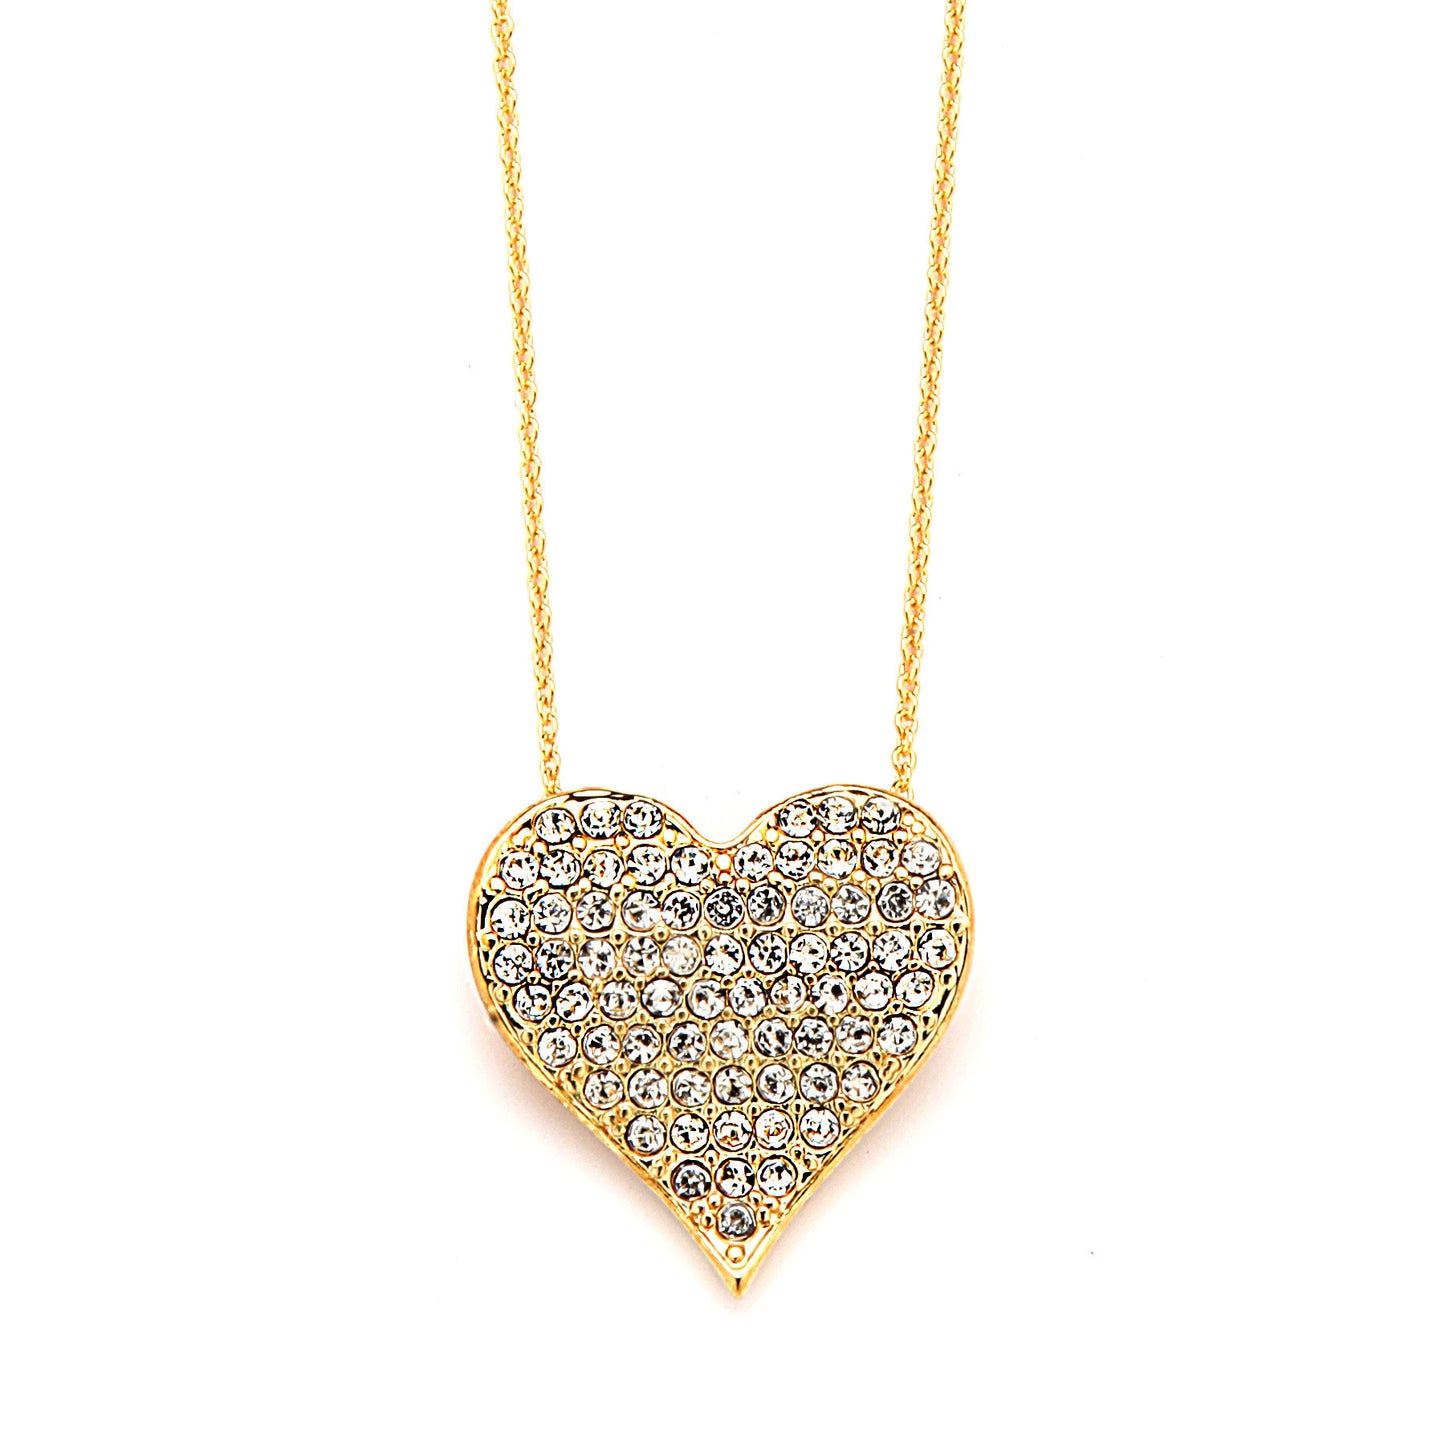 Medium Heart Pendant Necklace with Premium CZ